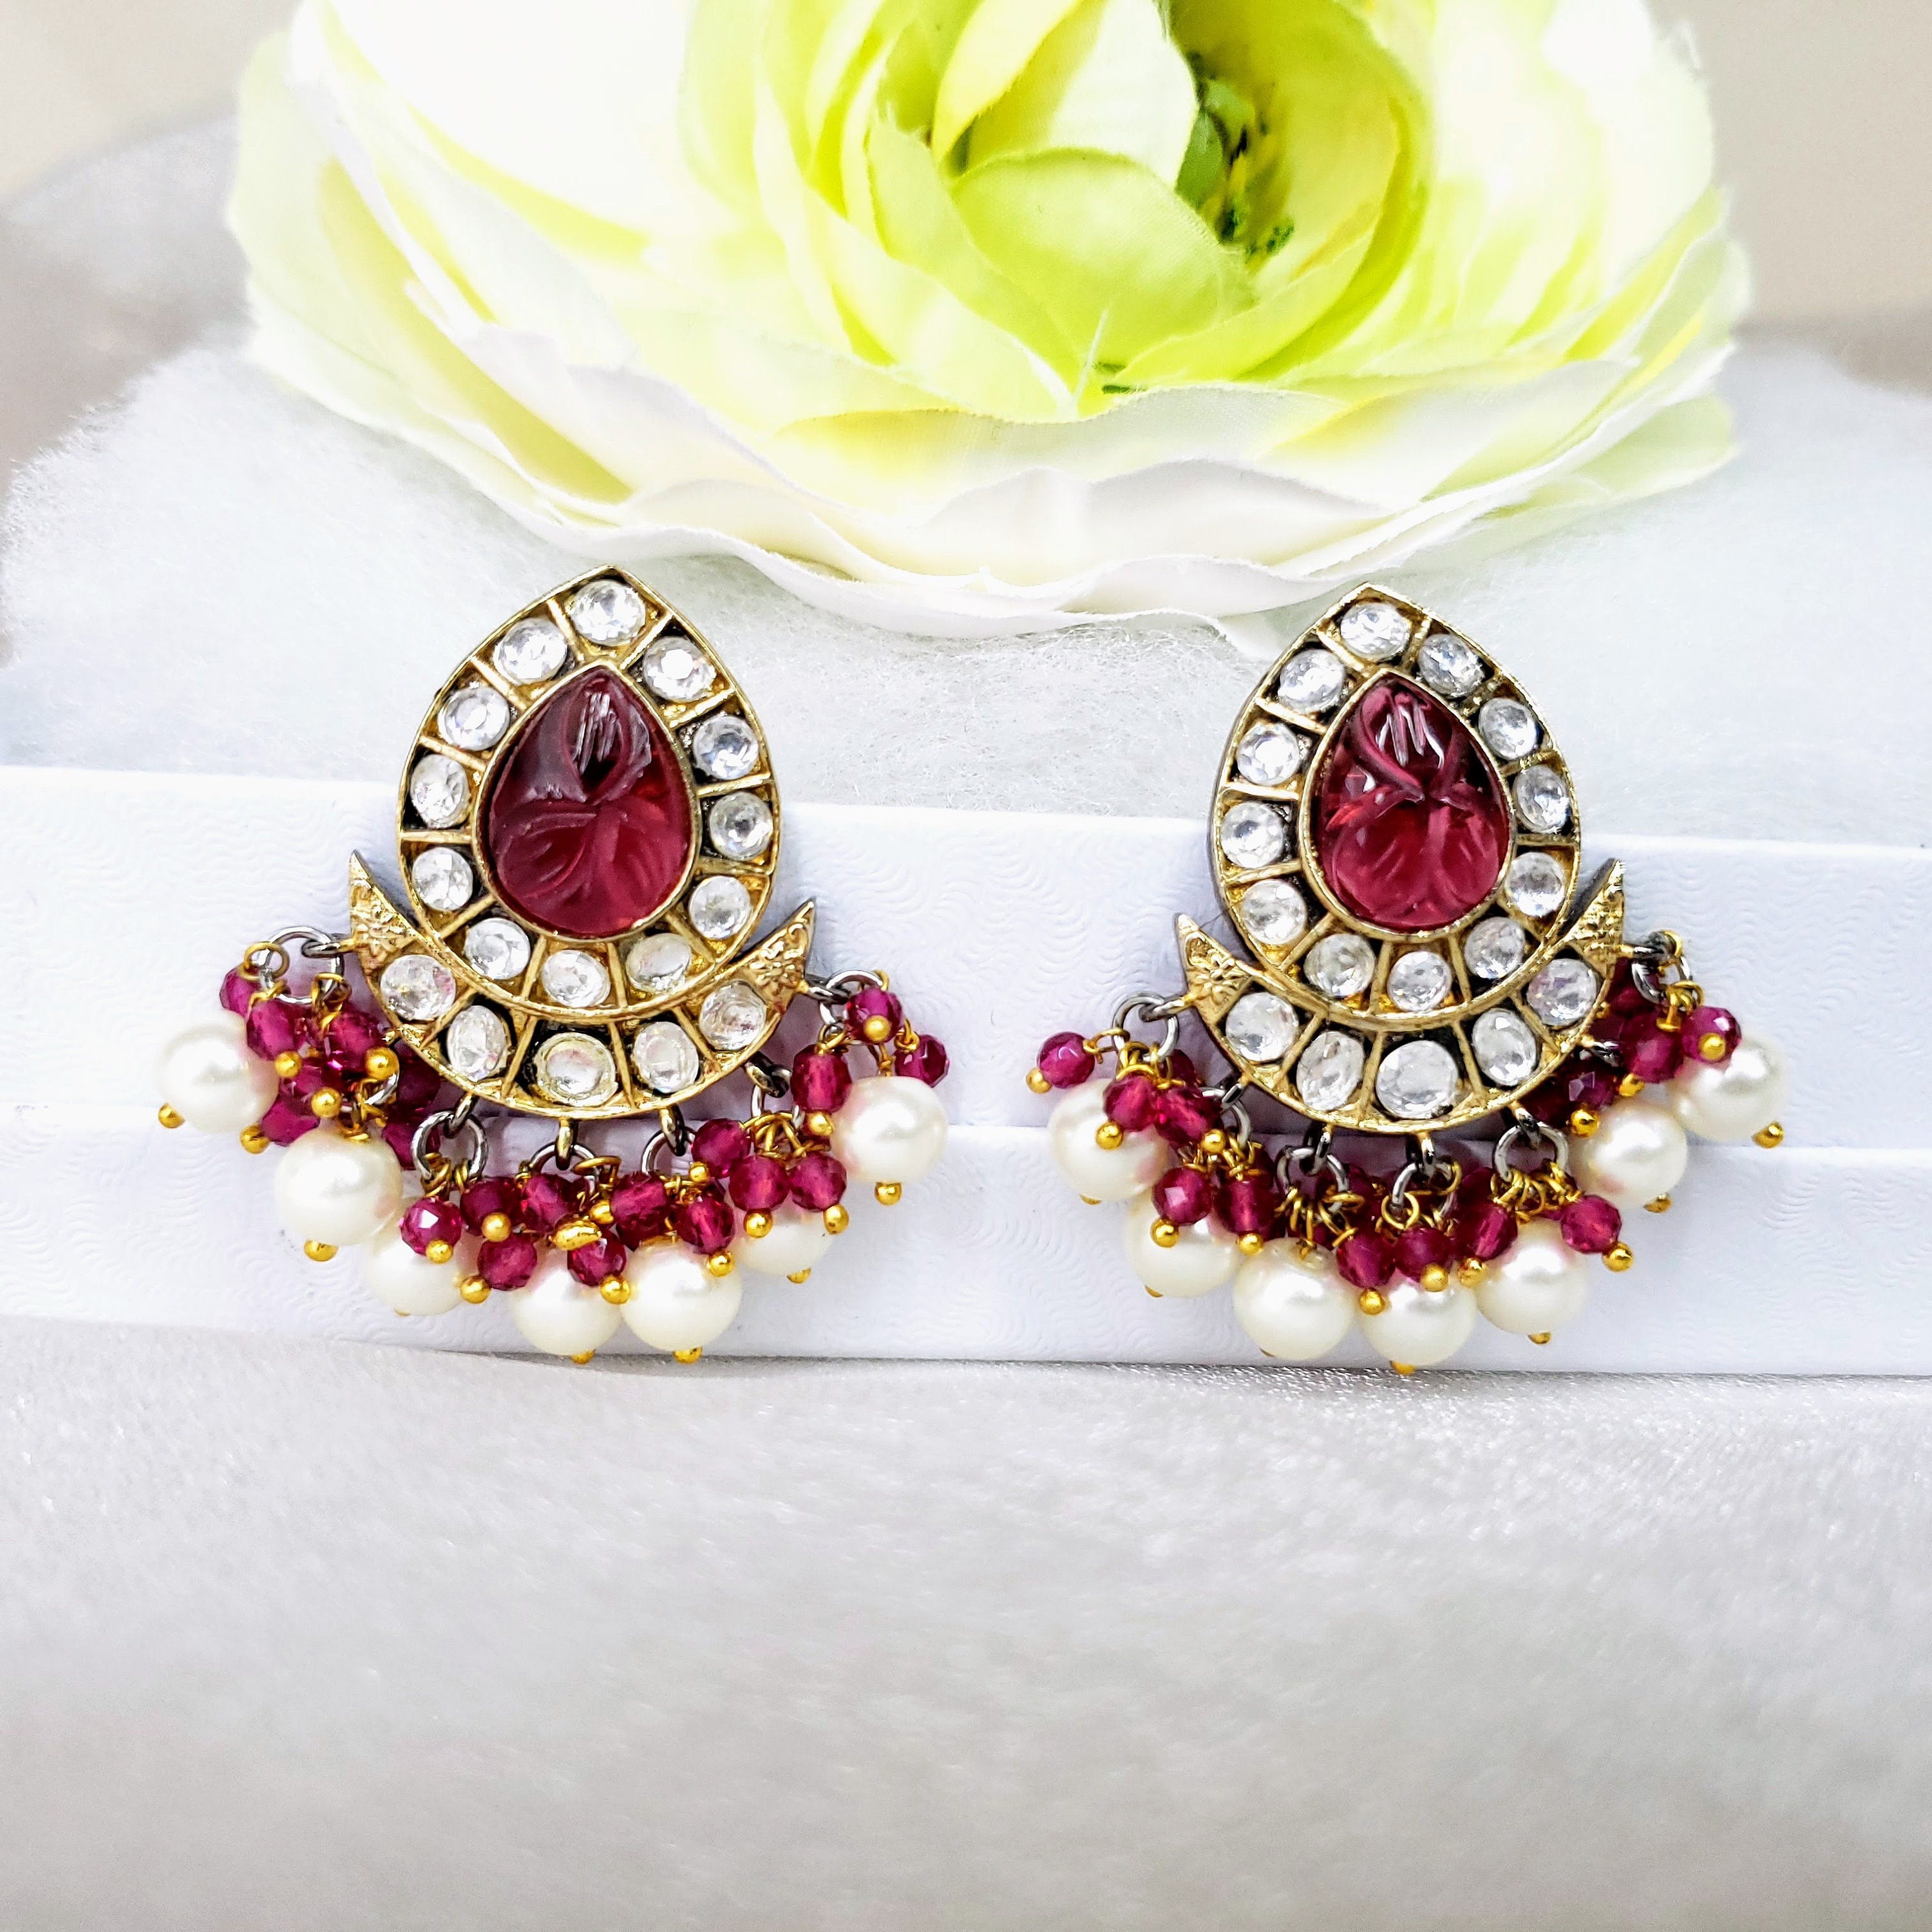 Details more than 194 kundan stone earrings super hot